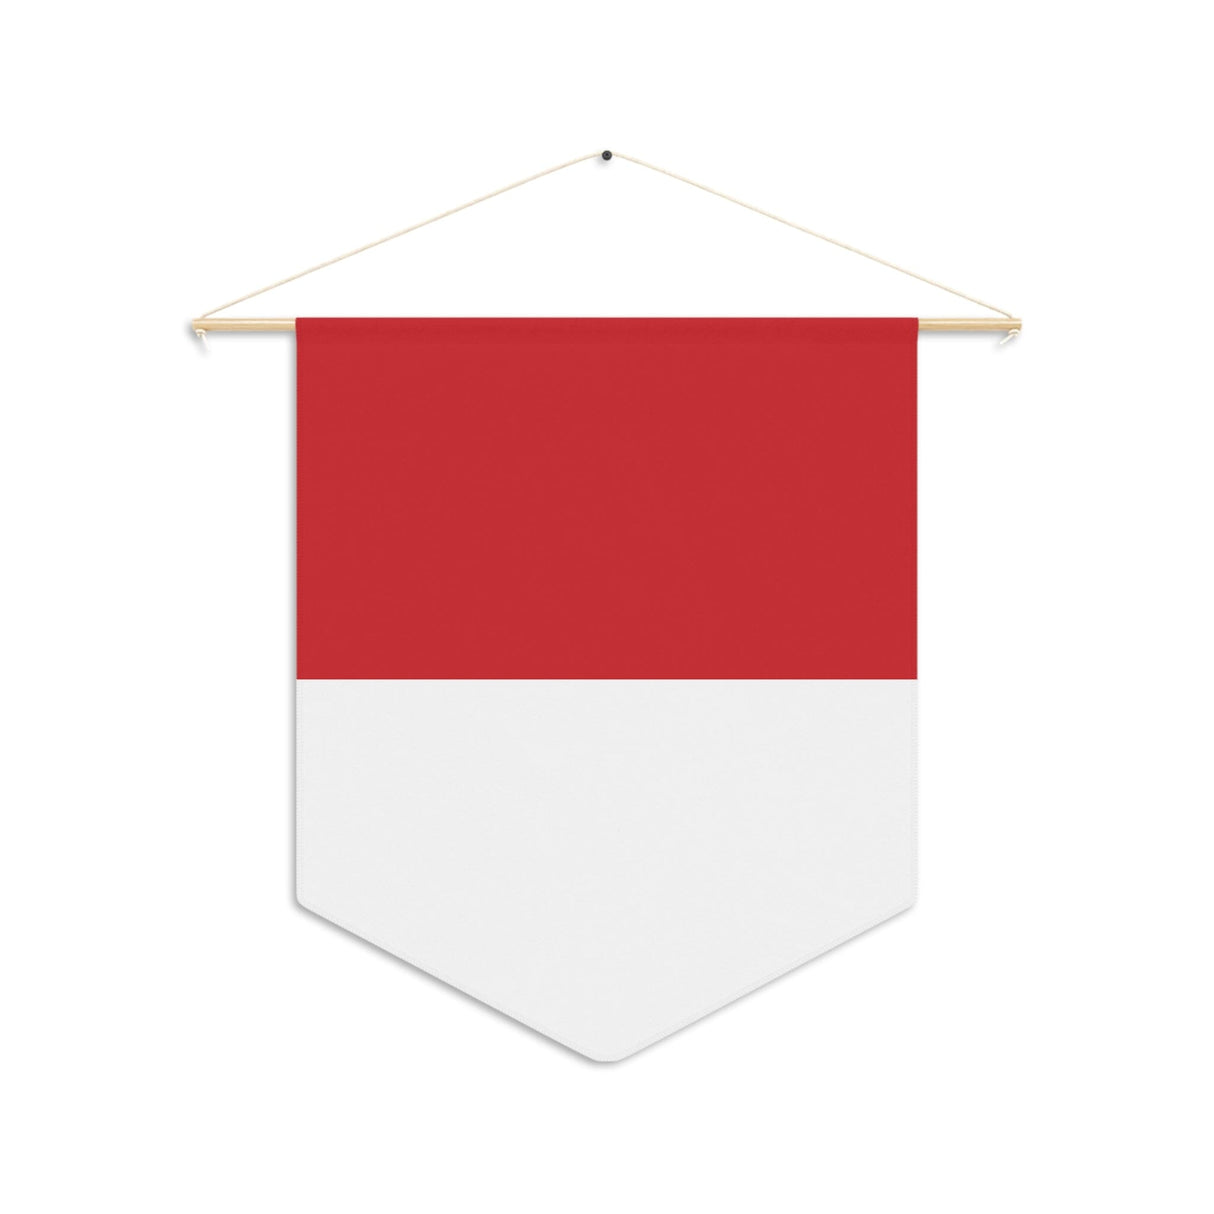 Monaco flag pennant to hang in polyester - Pixelforma